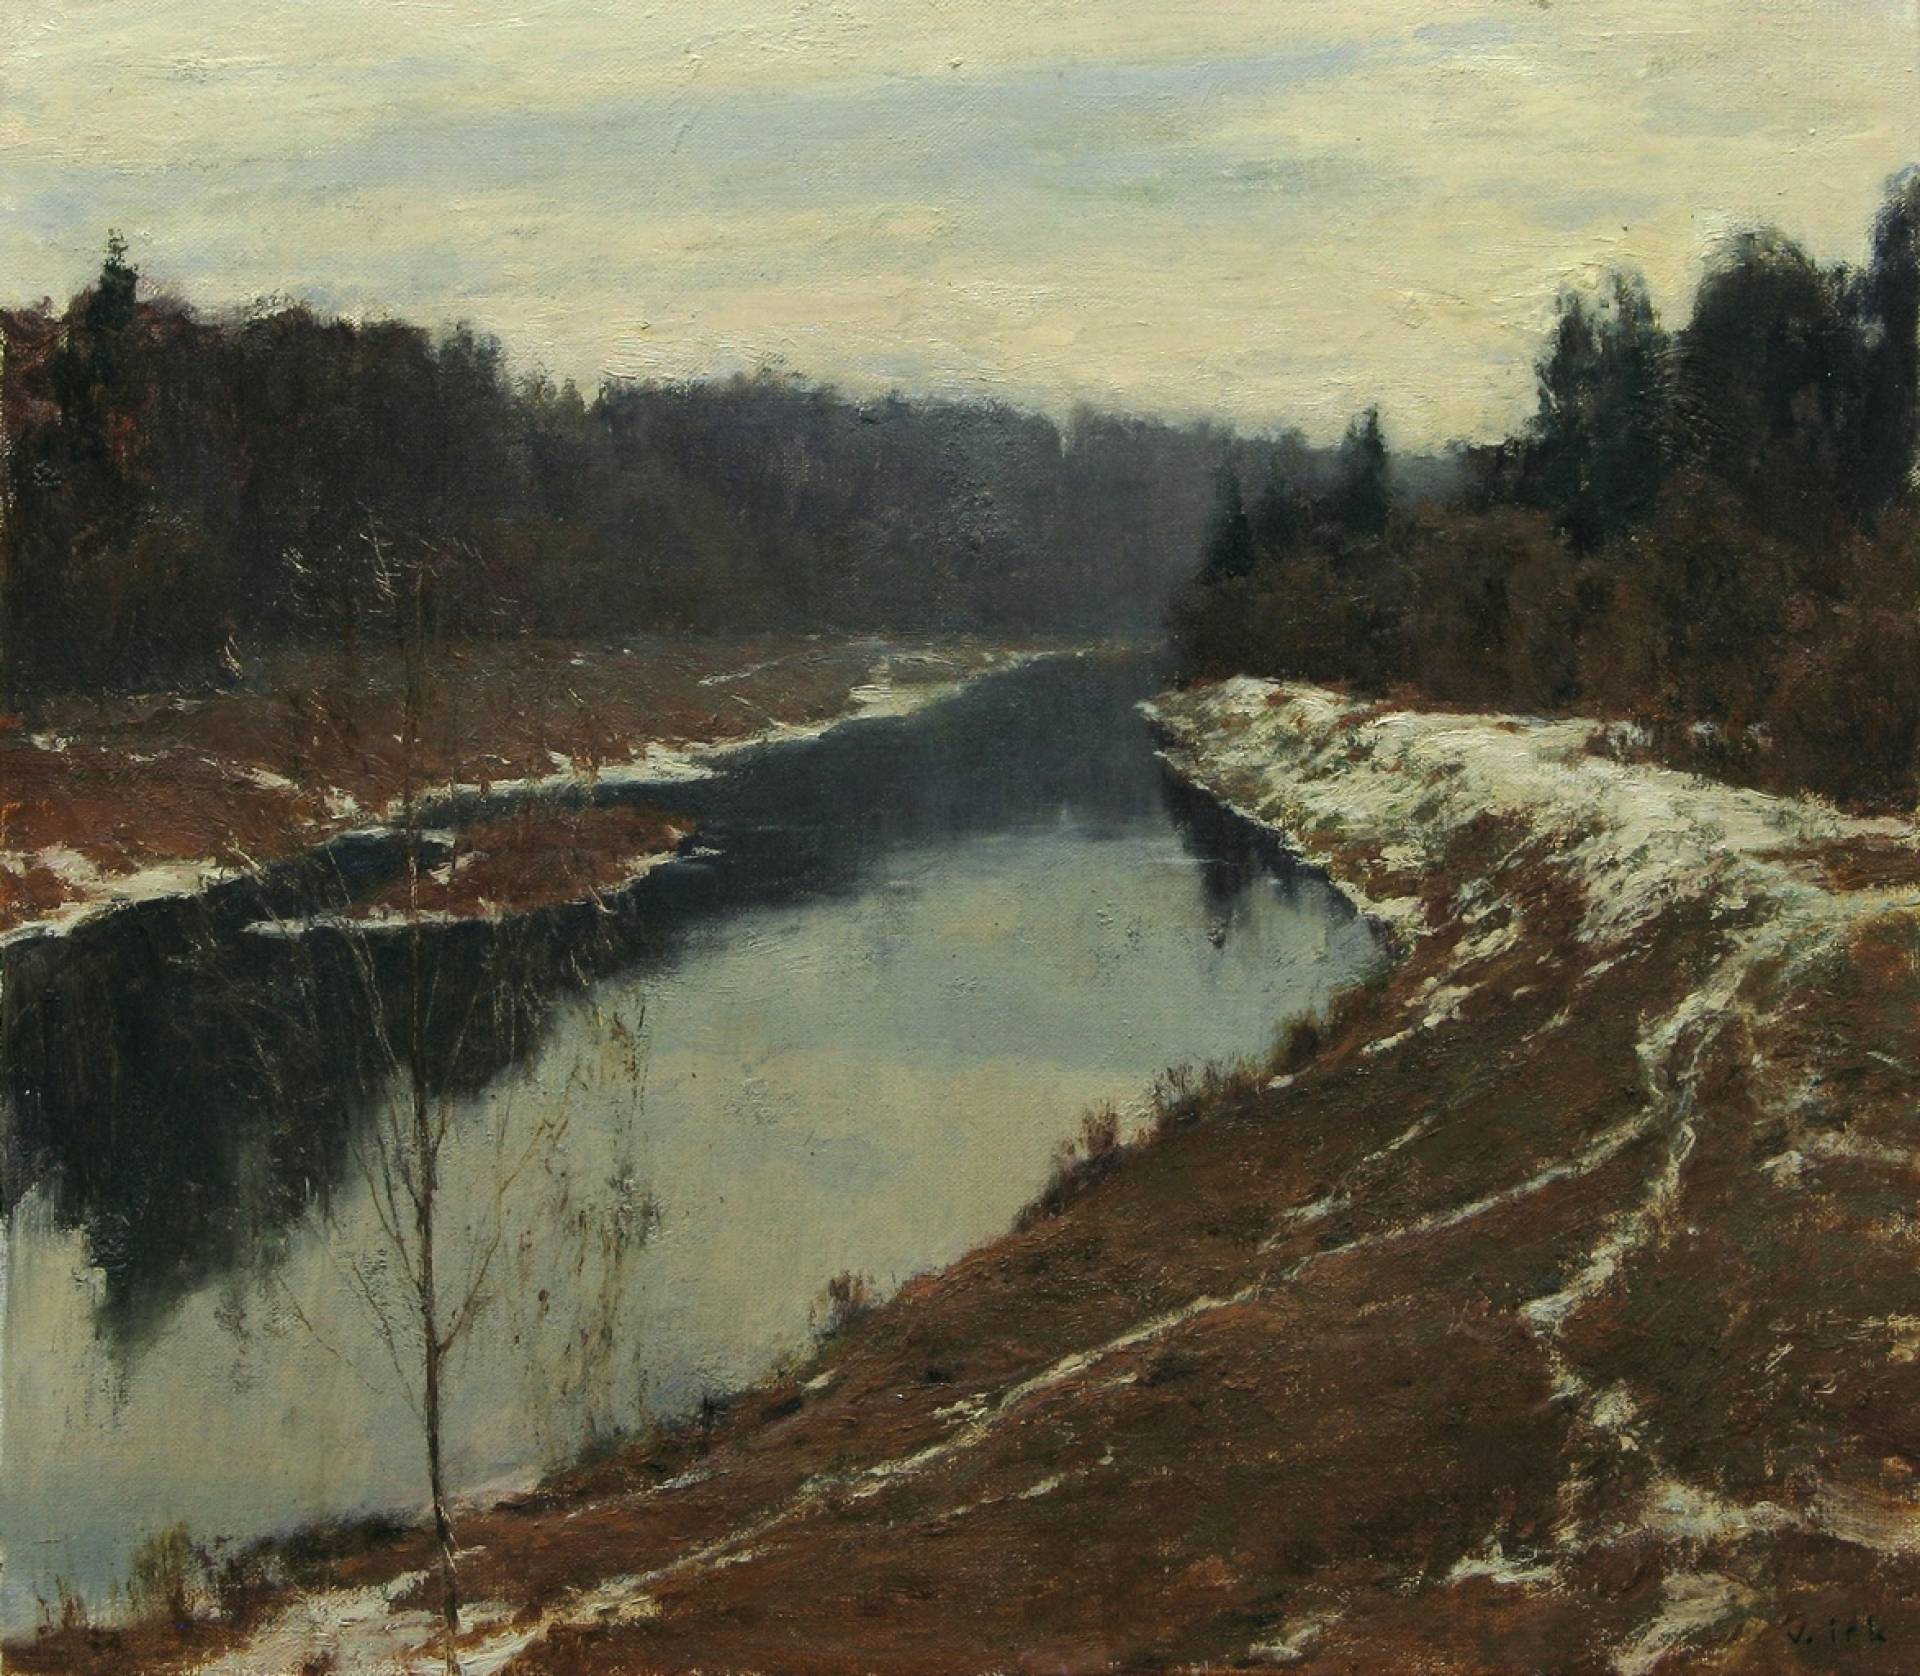 Moscow river - 1, Vladimir Kirillov, Buy the painting Oil